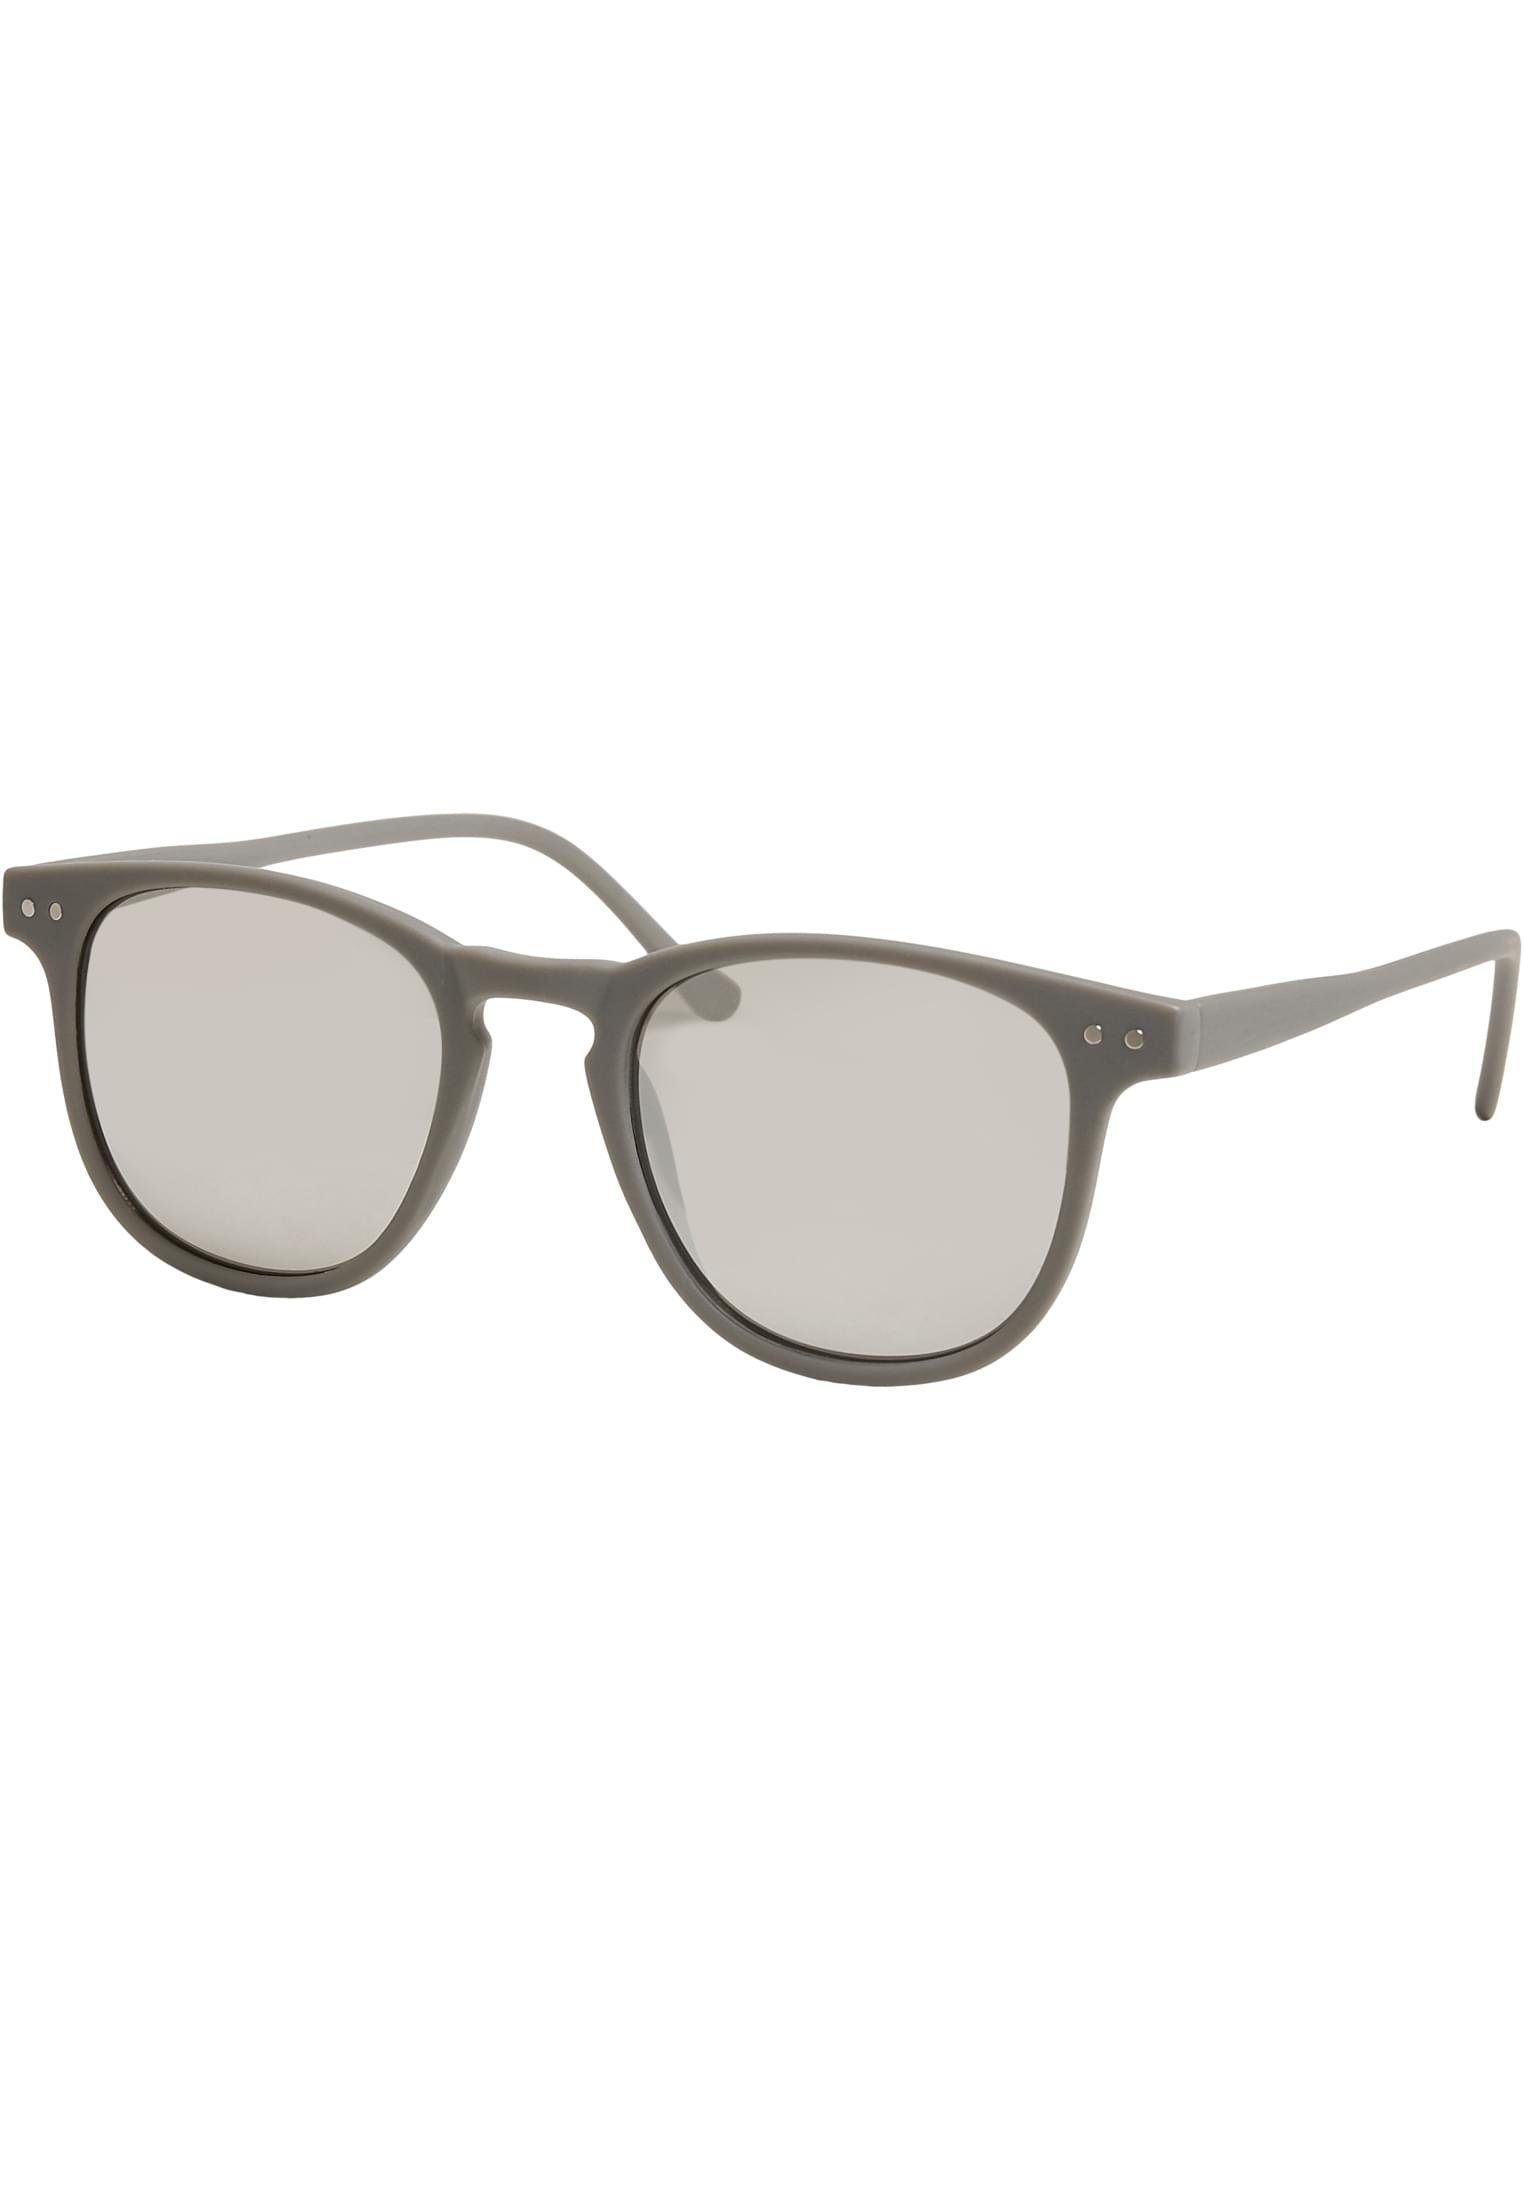 Sonnenbrille with Arthur CLASSICS URBAN Unisex grey/silver Chain Sunglasses